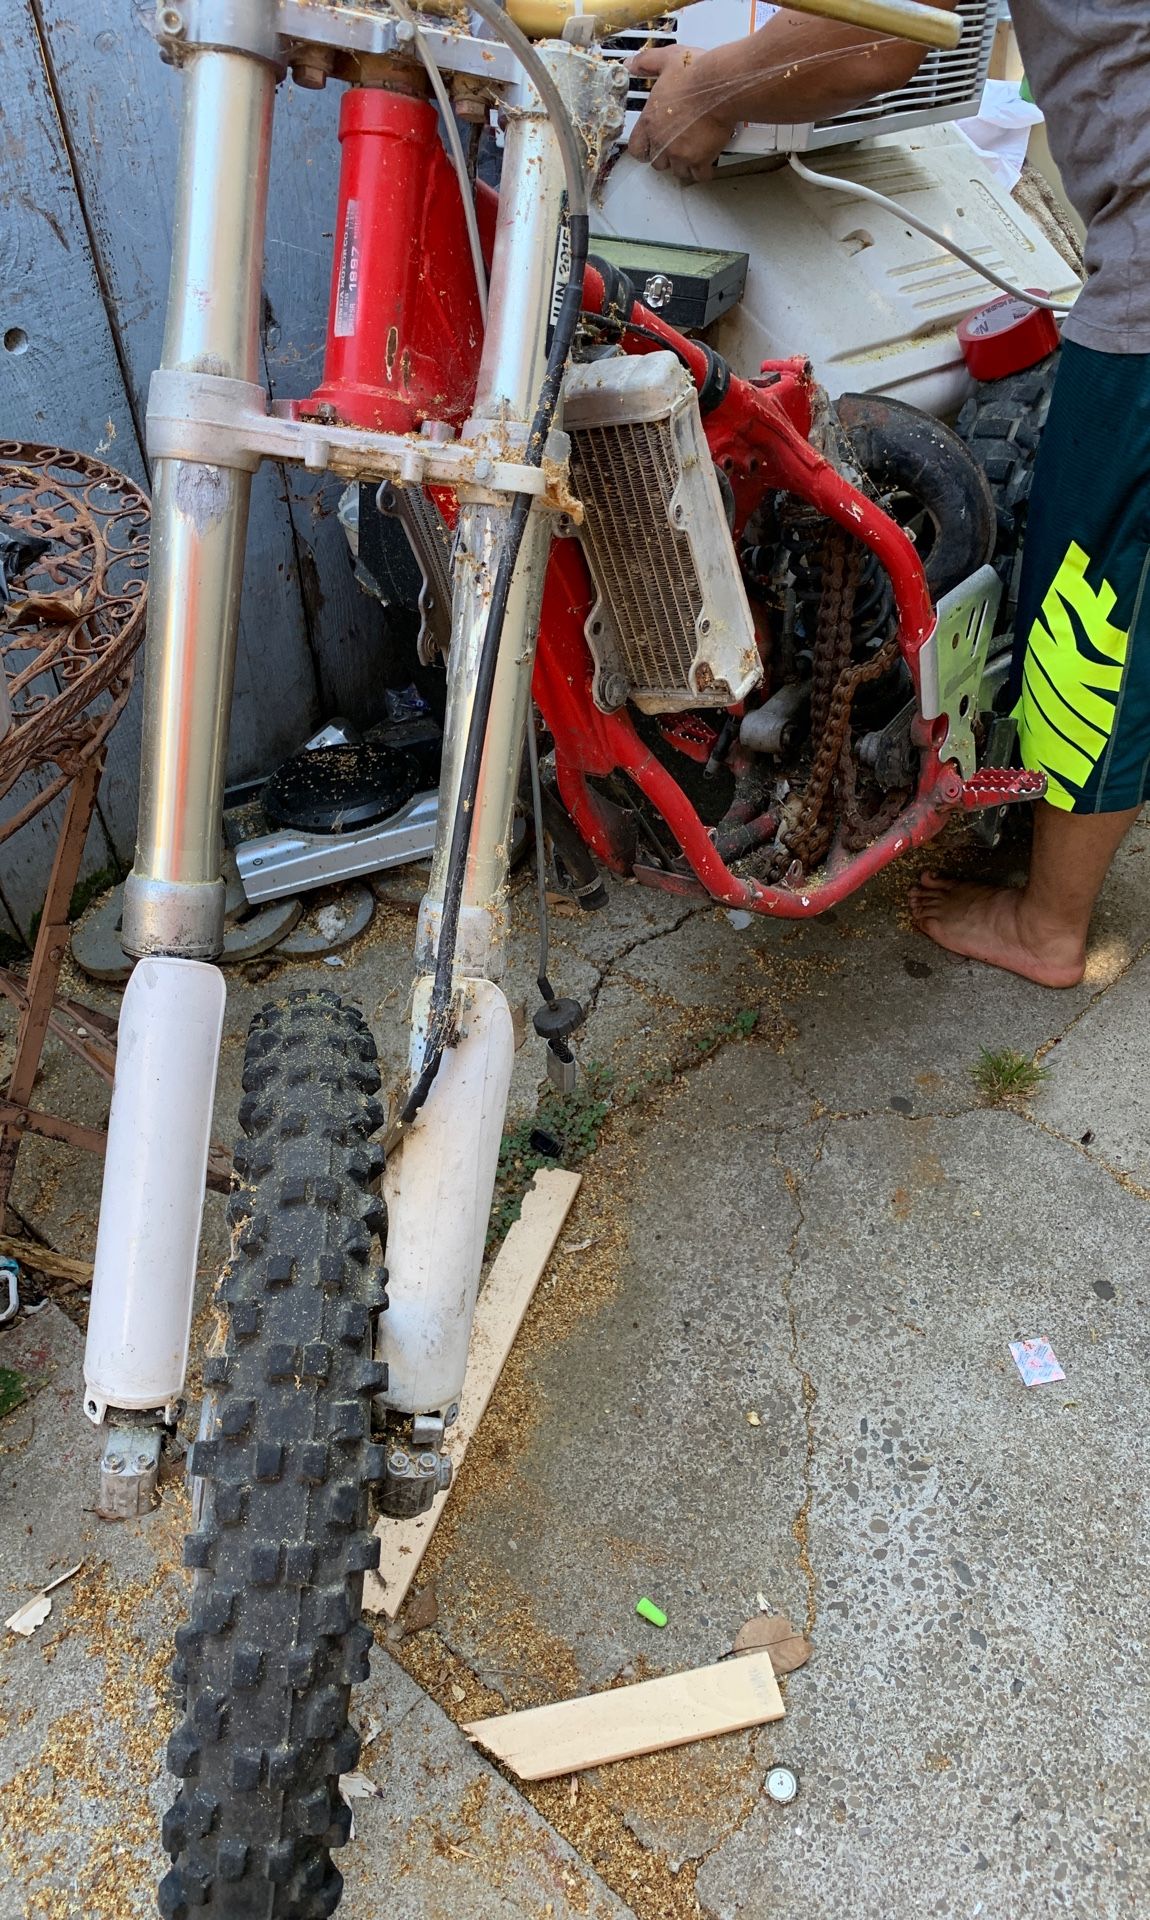 Honda cr125 dirt bike